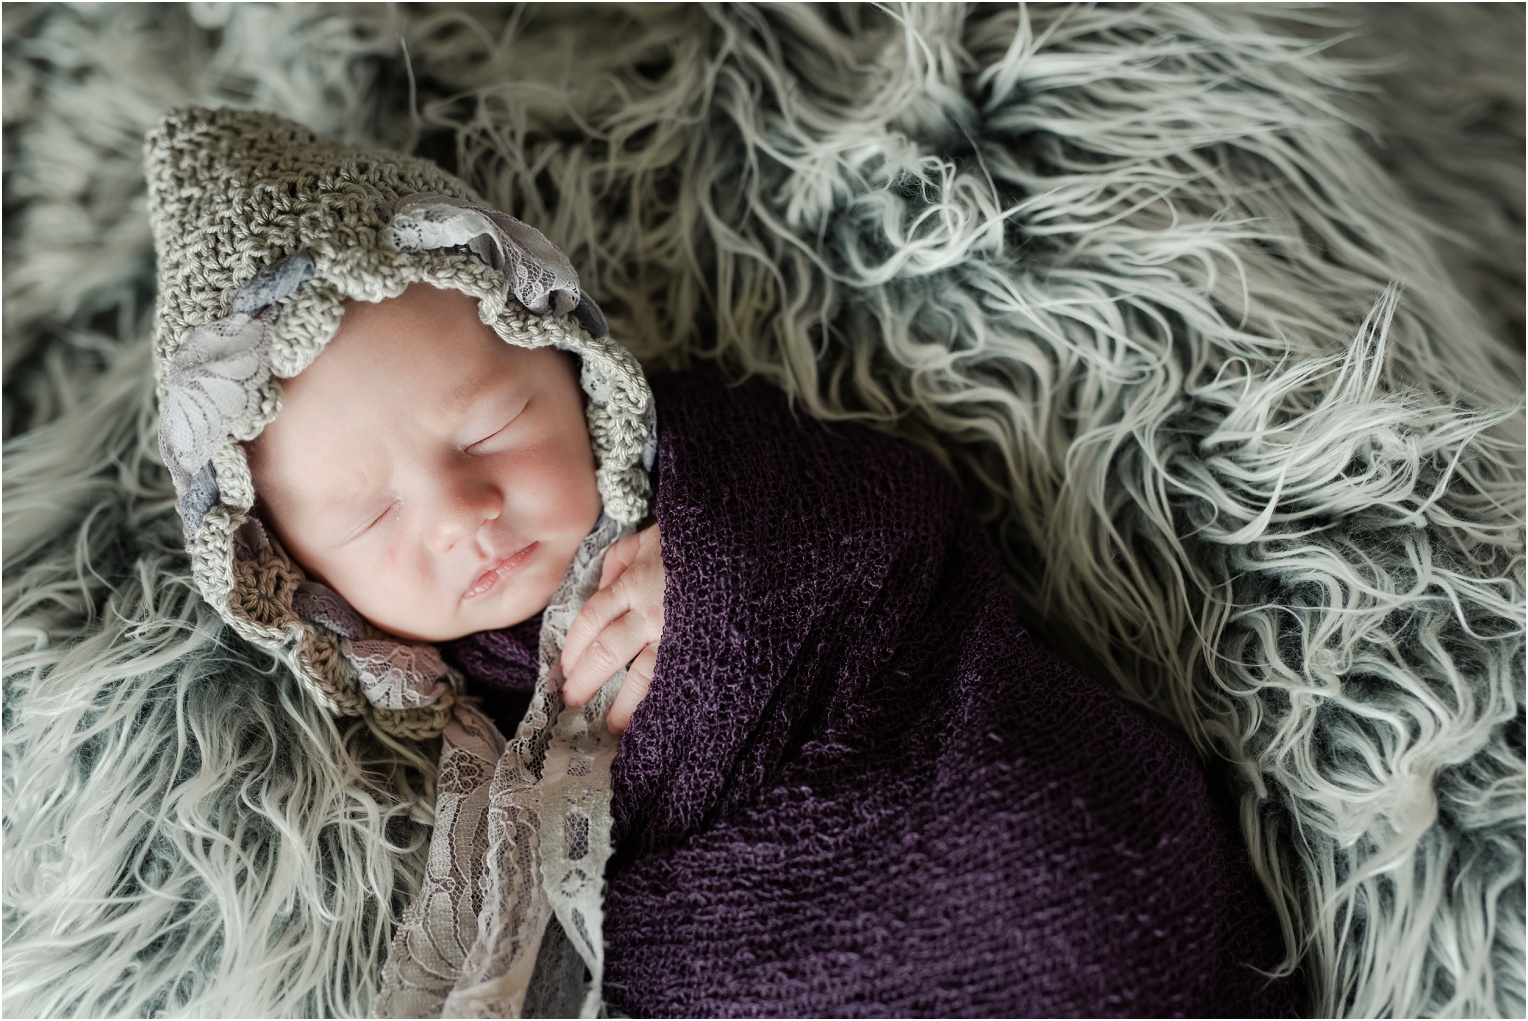 Janes Newborn Photography baby girl on fur rug